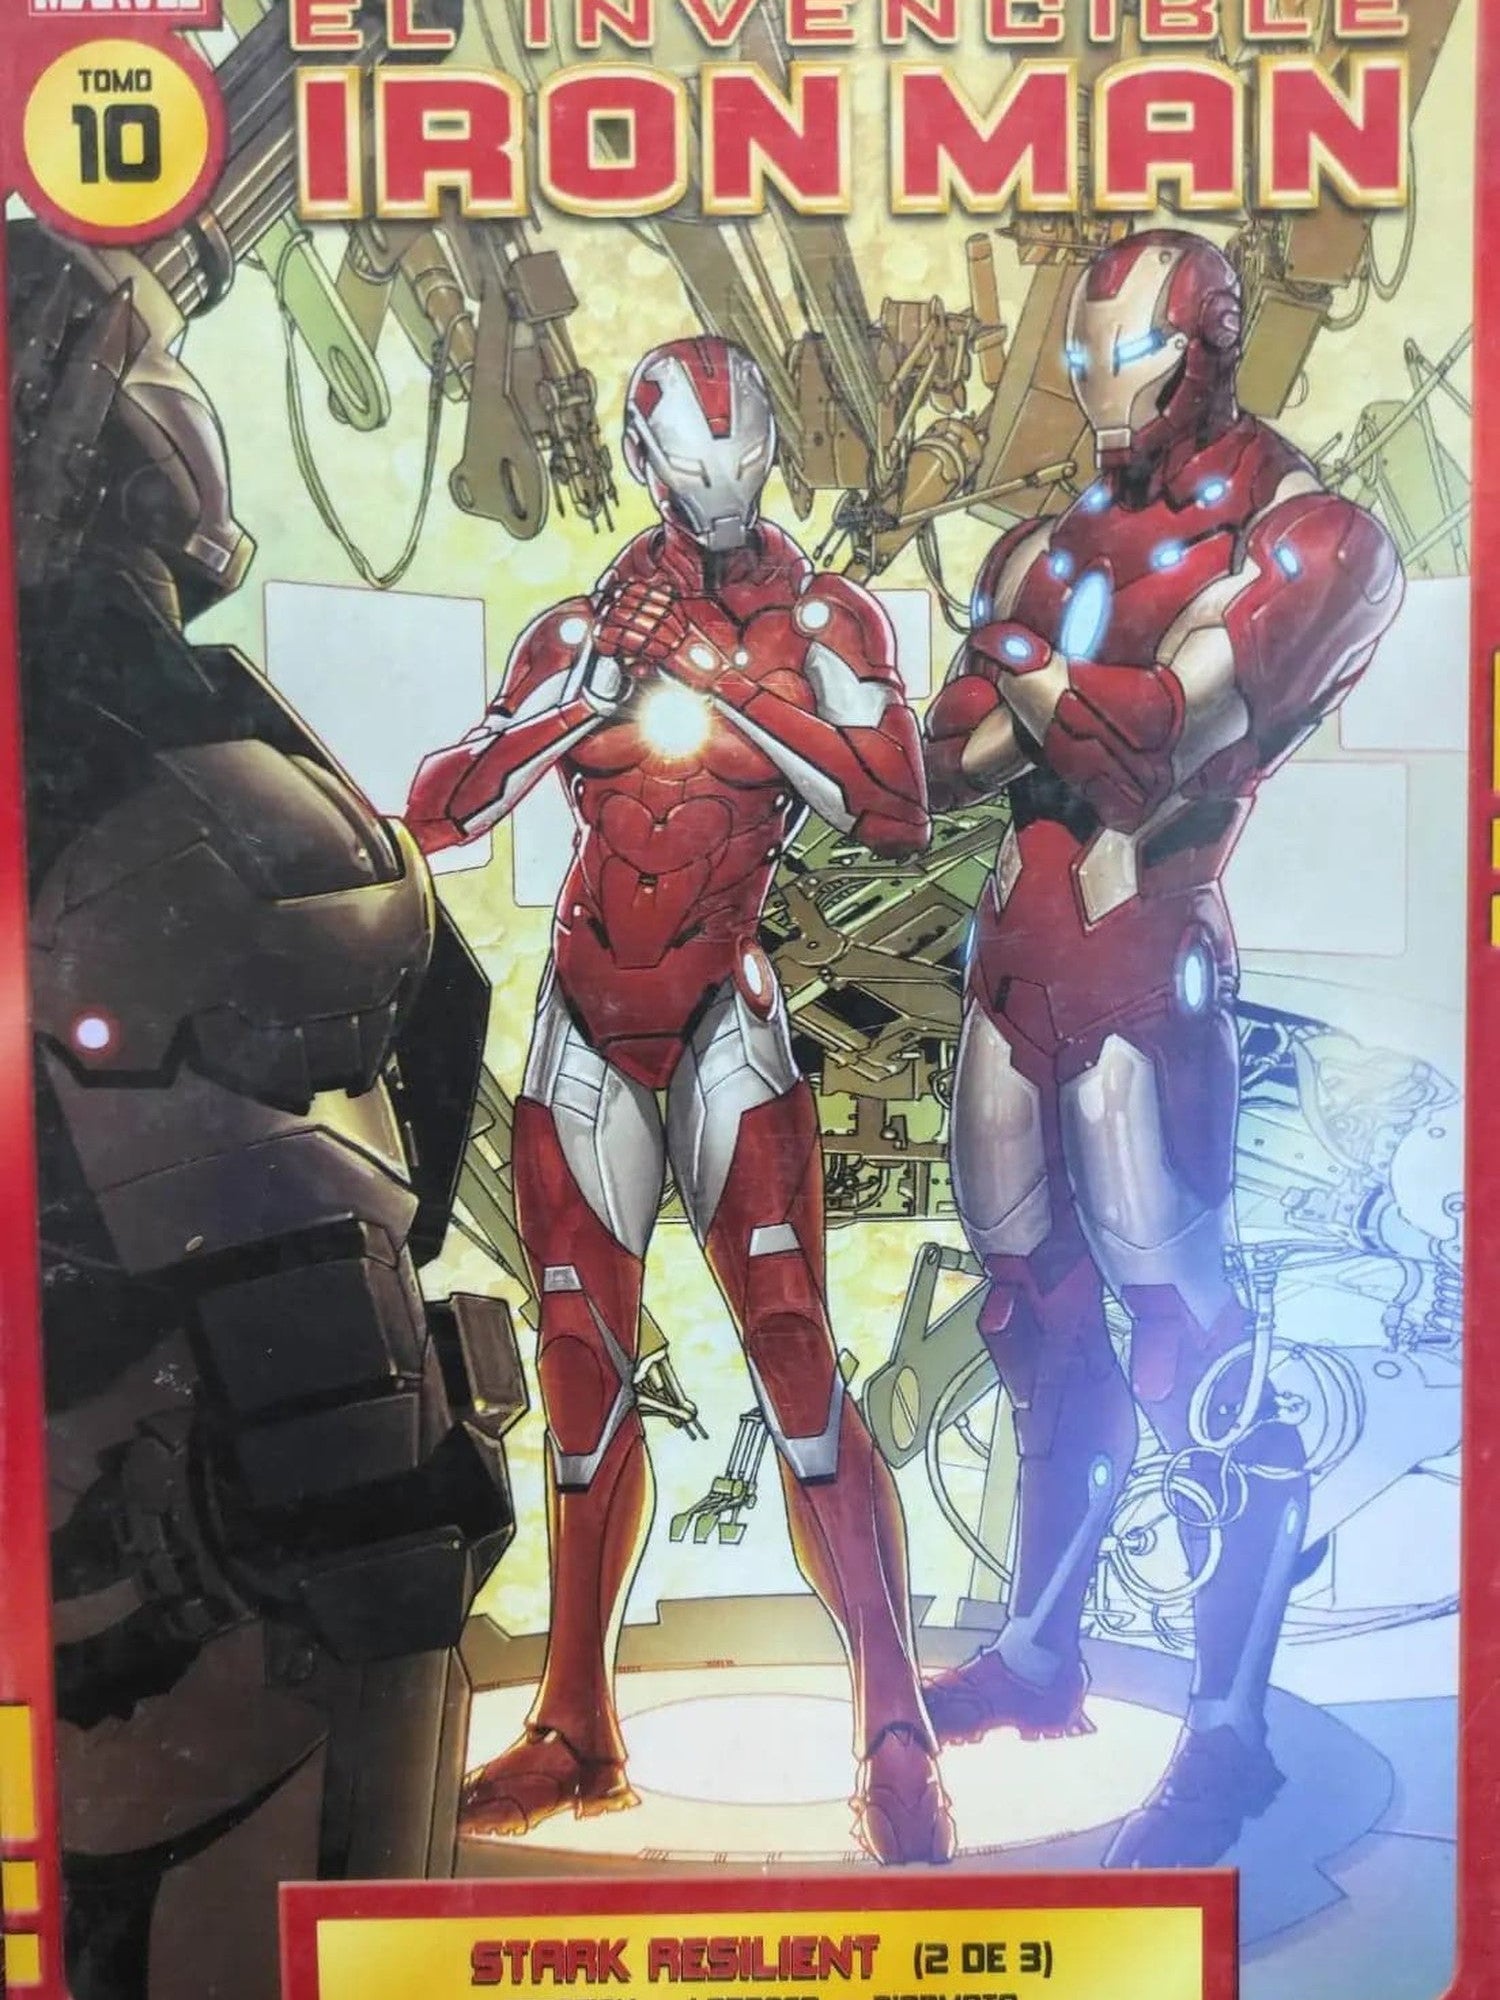 El Invencible Iron Man: Stark Resilient - Tomo 10 Clarín ENcuadrocomics